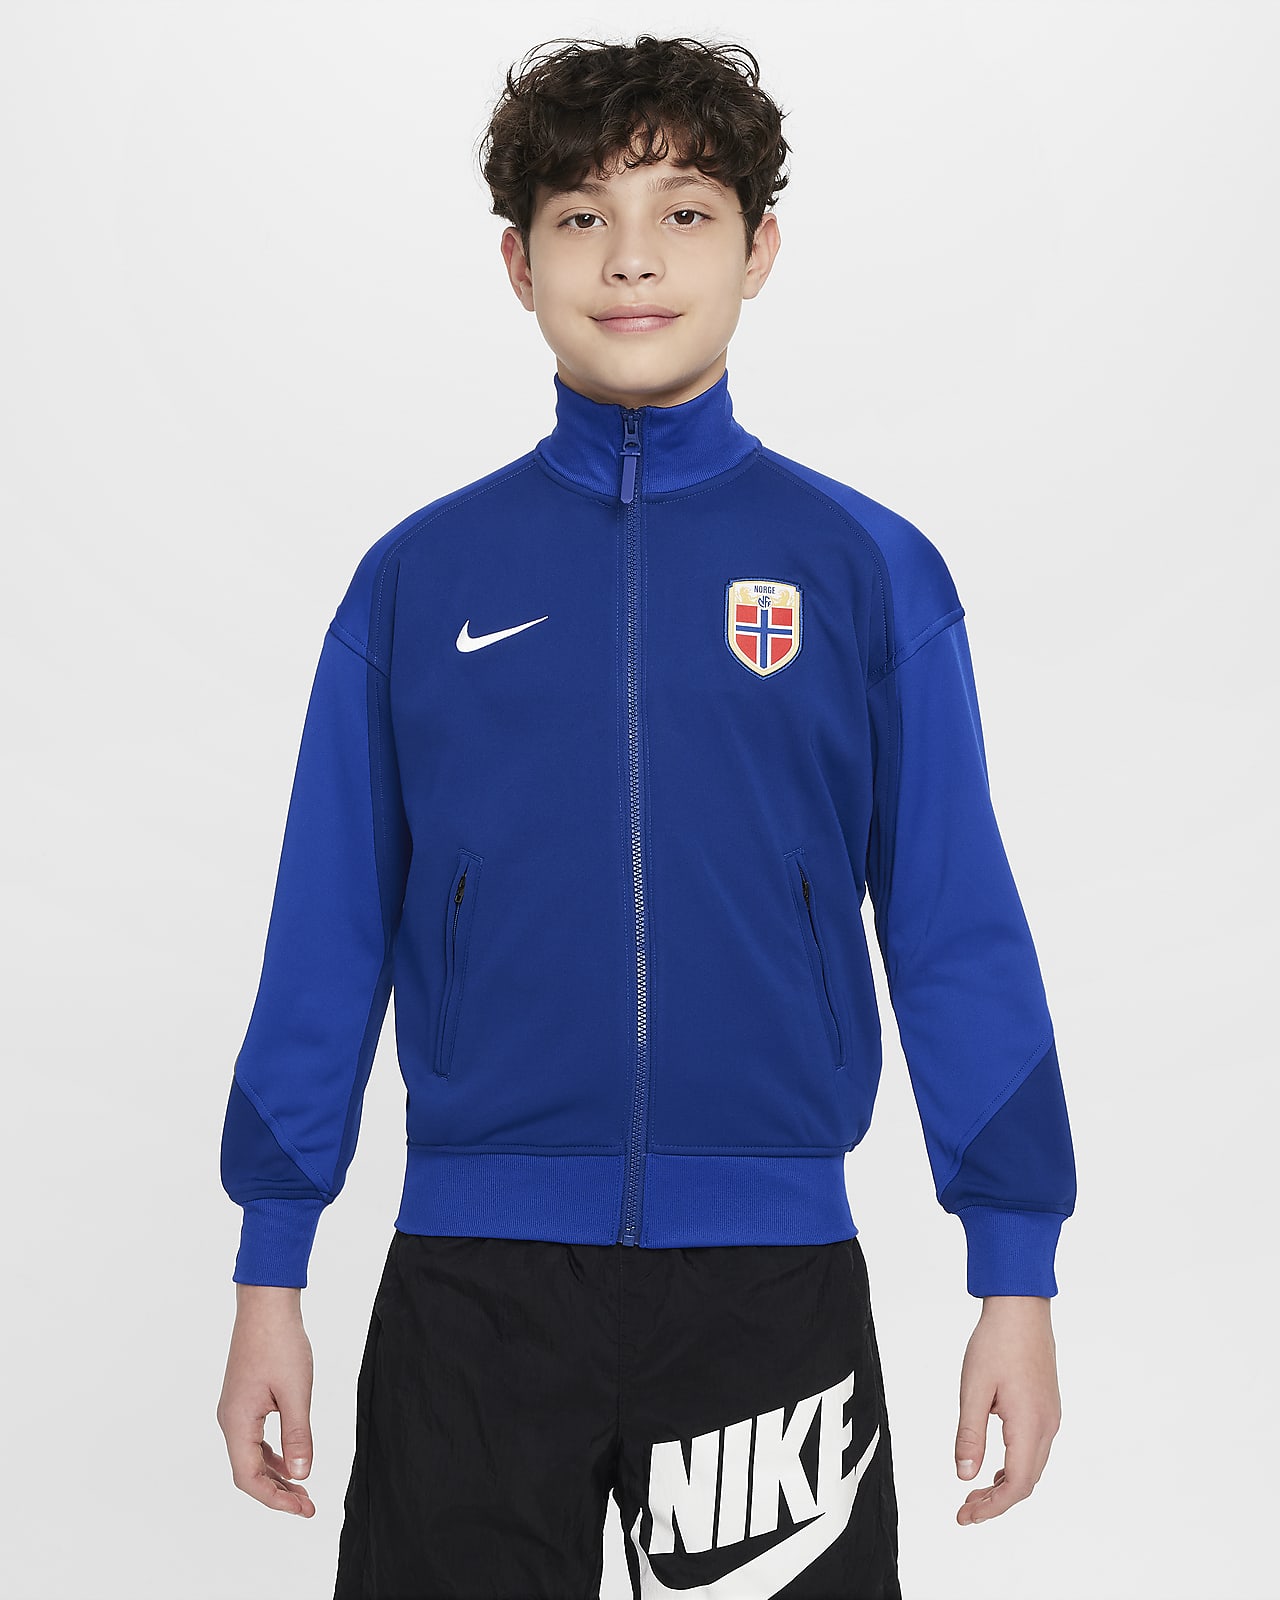 Academy Pro Noruega Chaqueta de fútbol Nike Dri-FIT - Niño/a